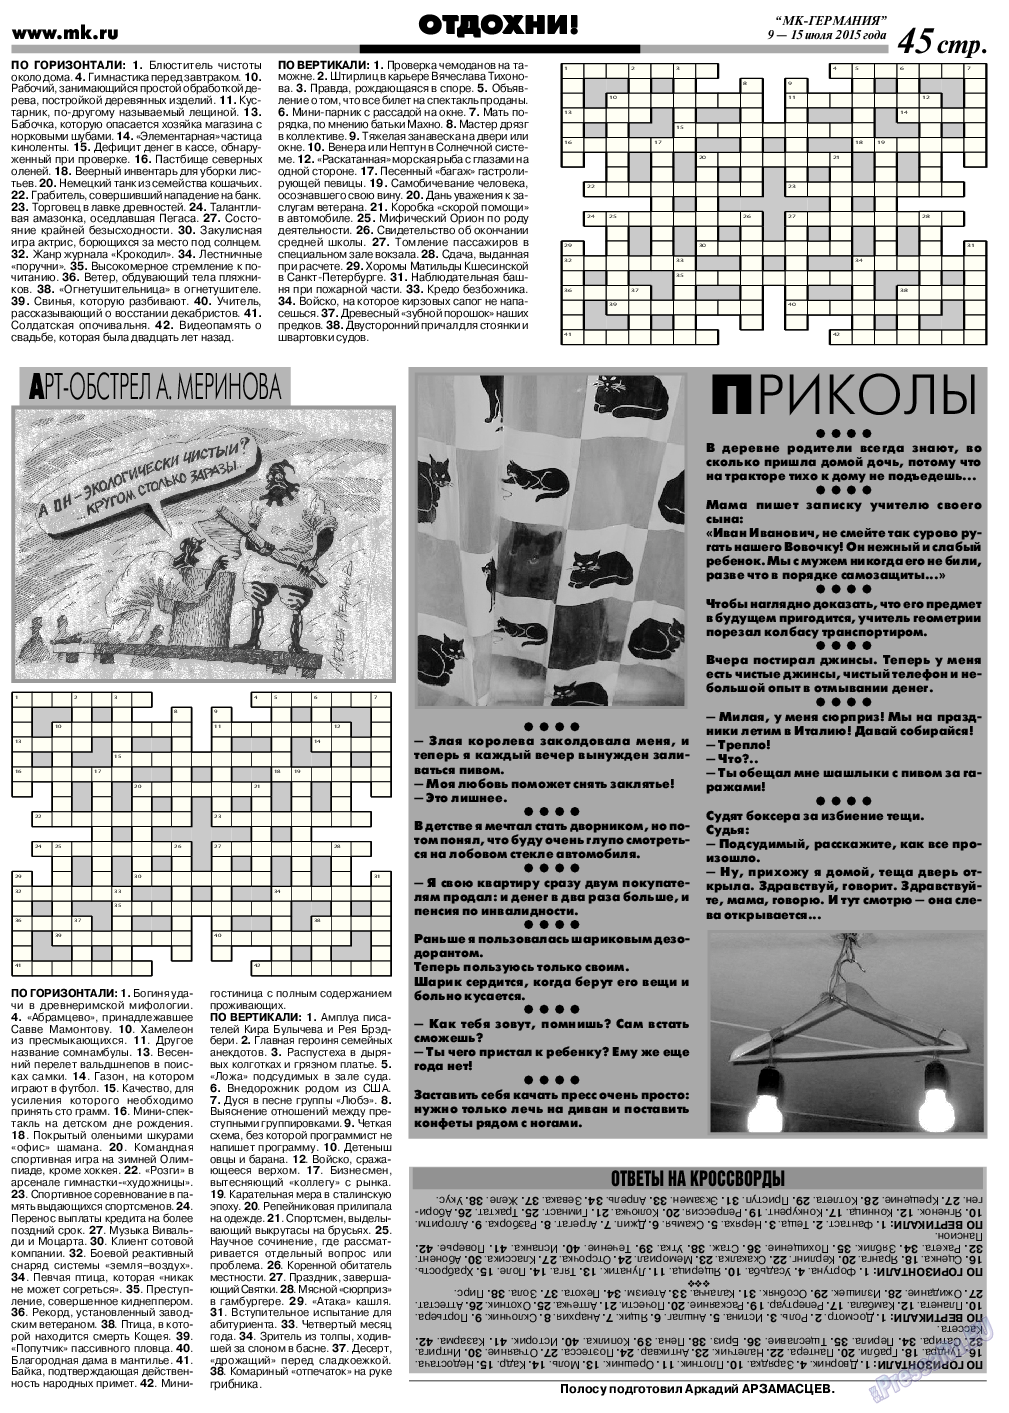 МК-Германия, газета. 2015 №28 стр.45